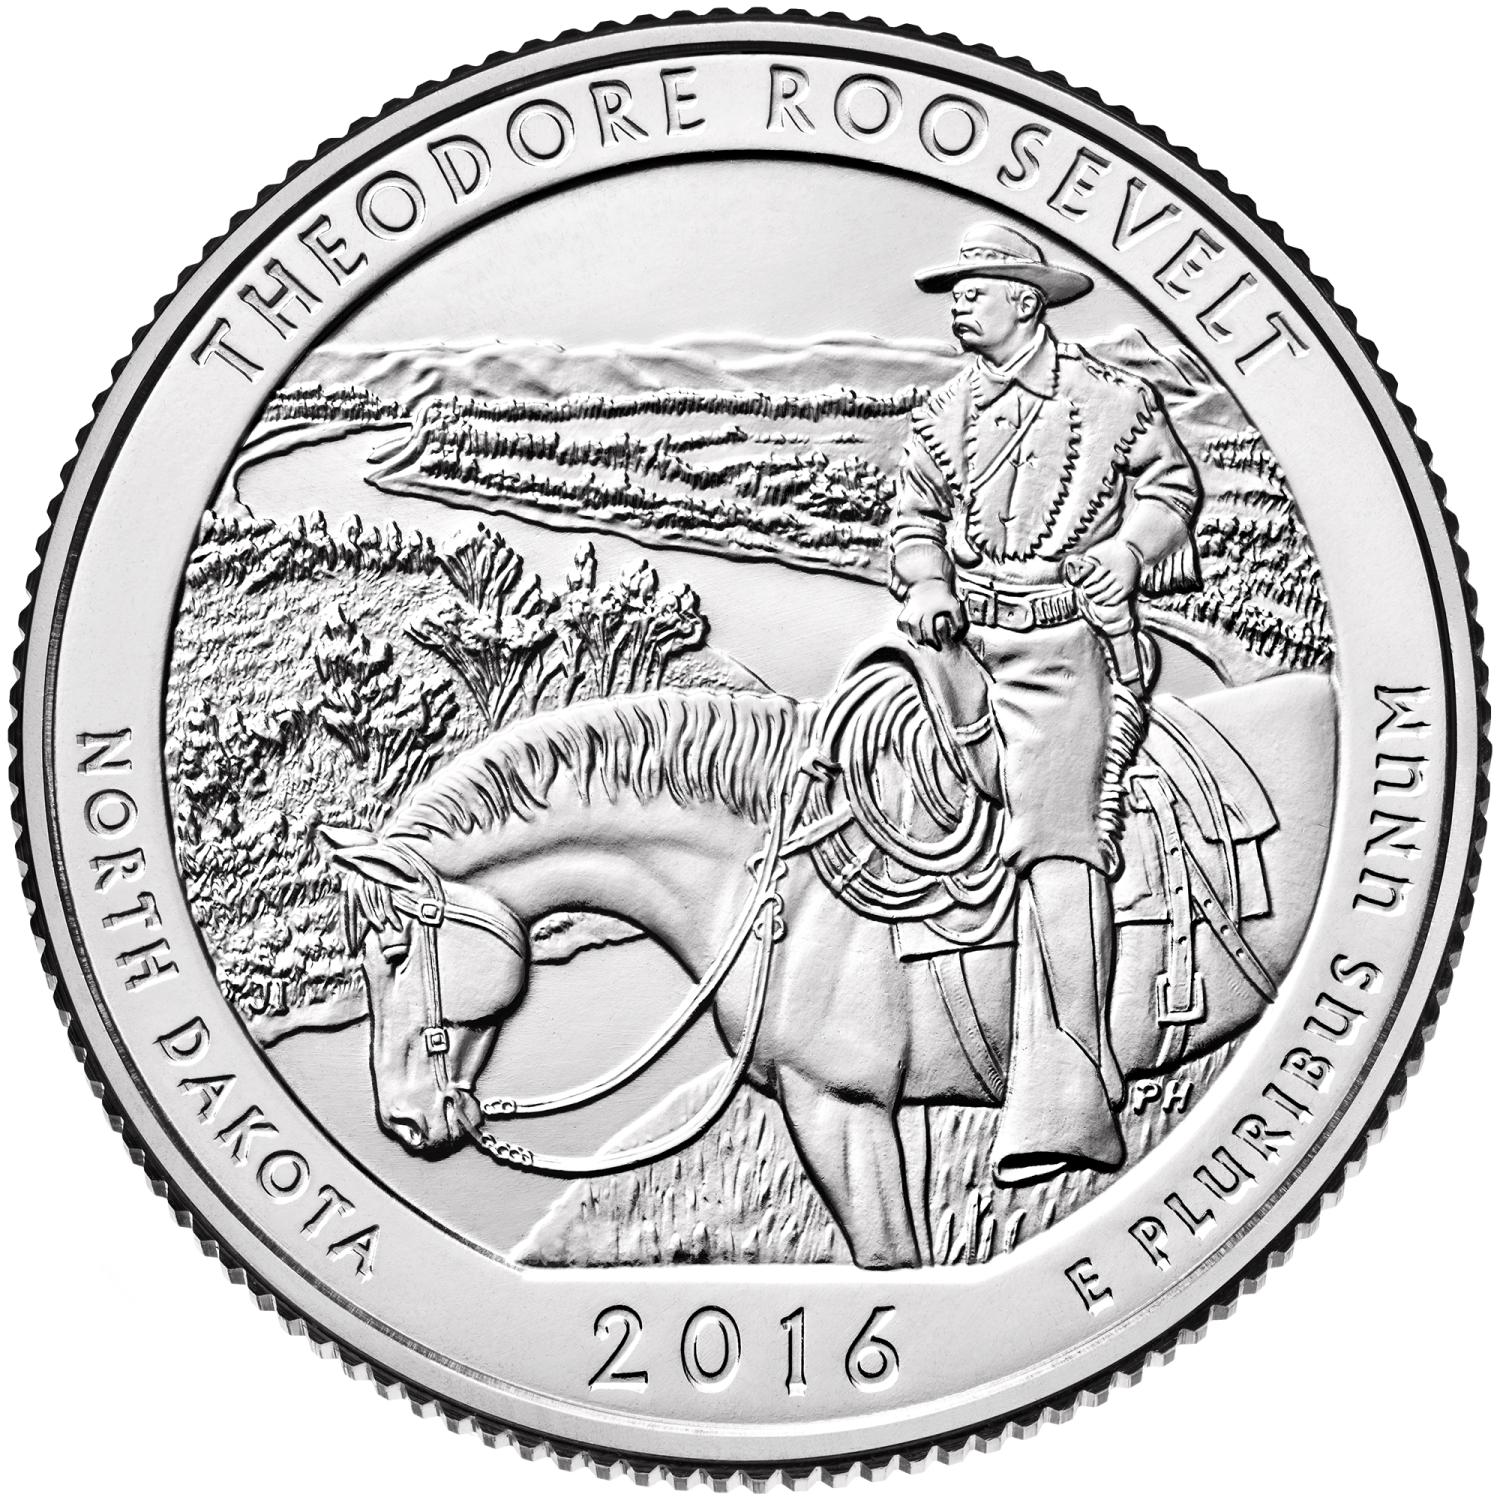 Quarter Dollar Commémorative des Etats-Unis 2016 - Theodore Roosevelt National Park